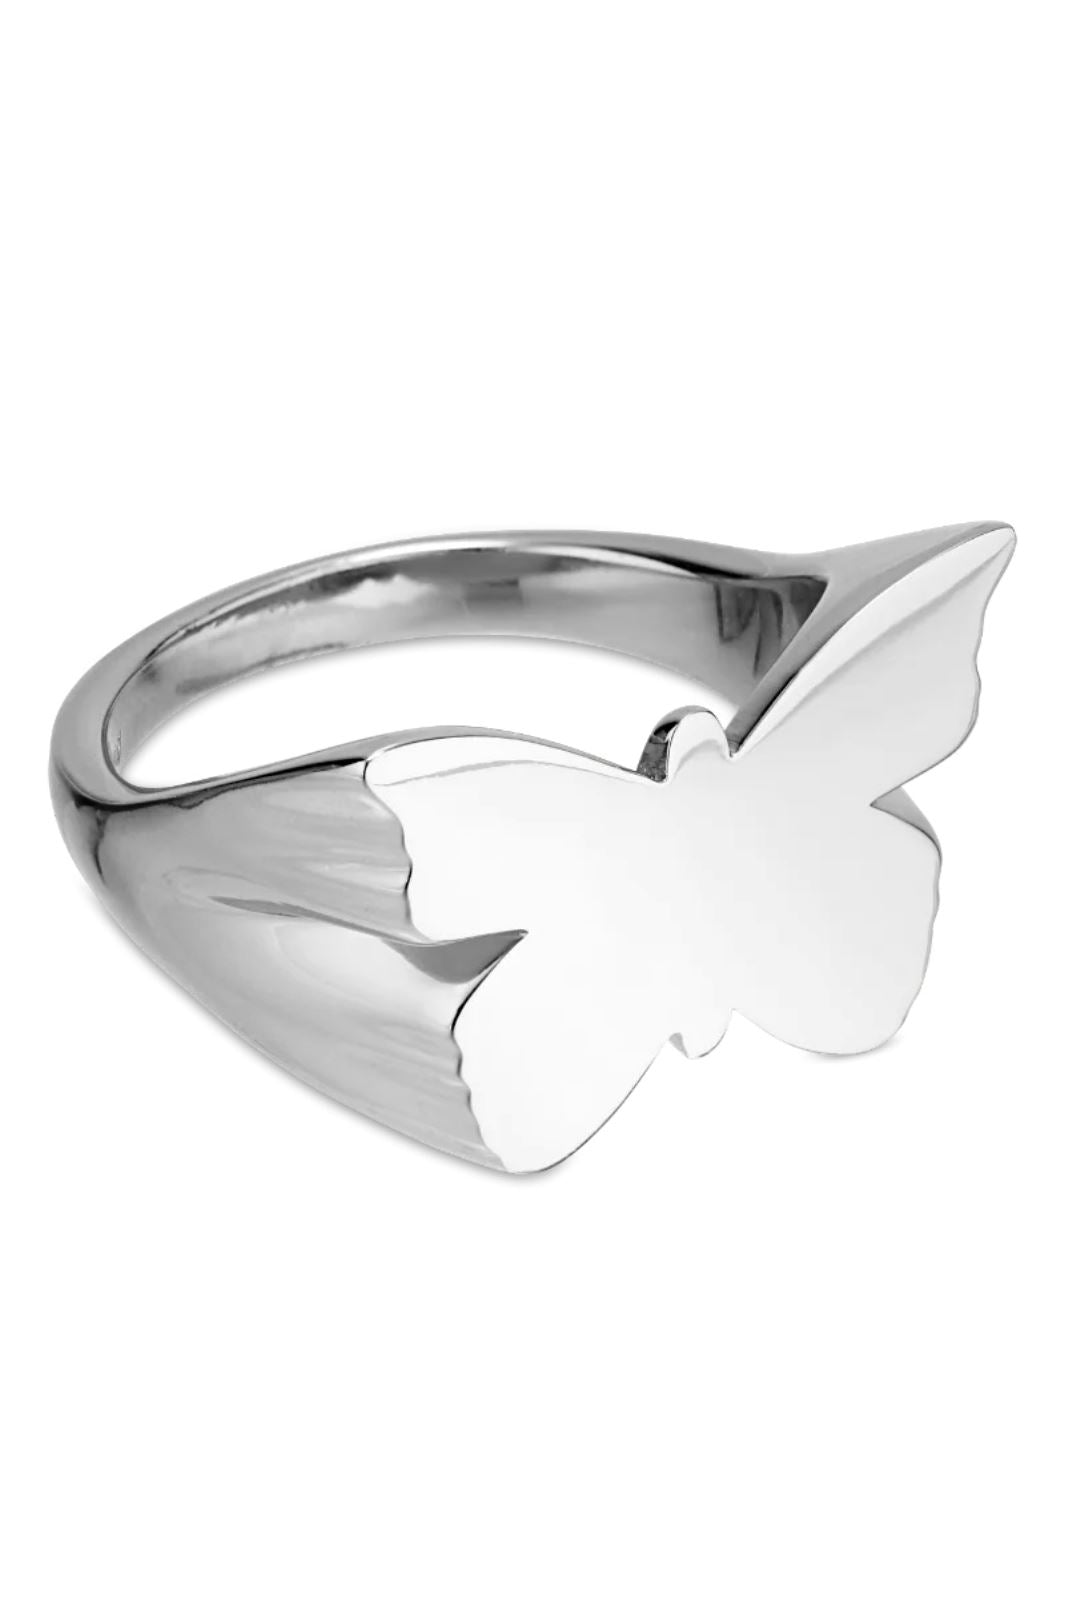 Jane Kønig - Butterfly Signet ring - Forsølvet Ringe 